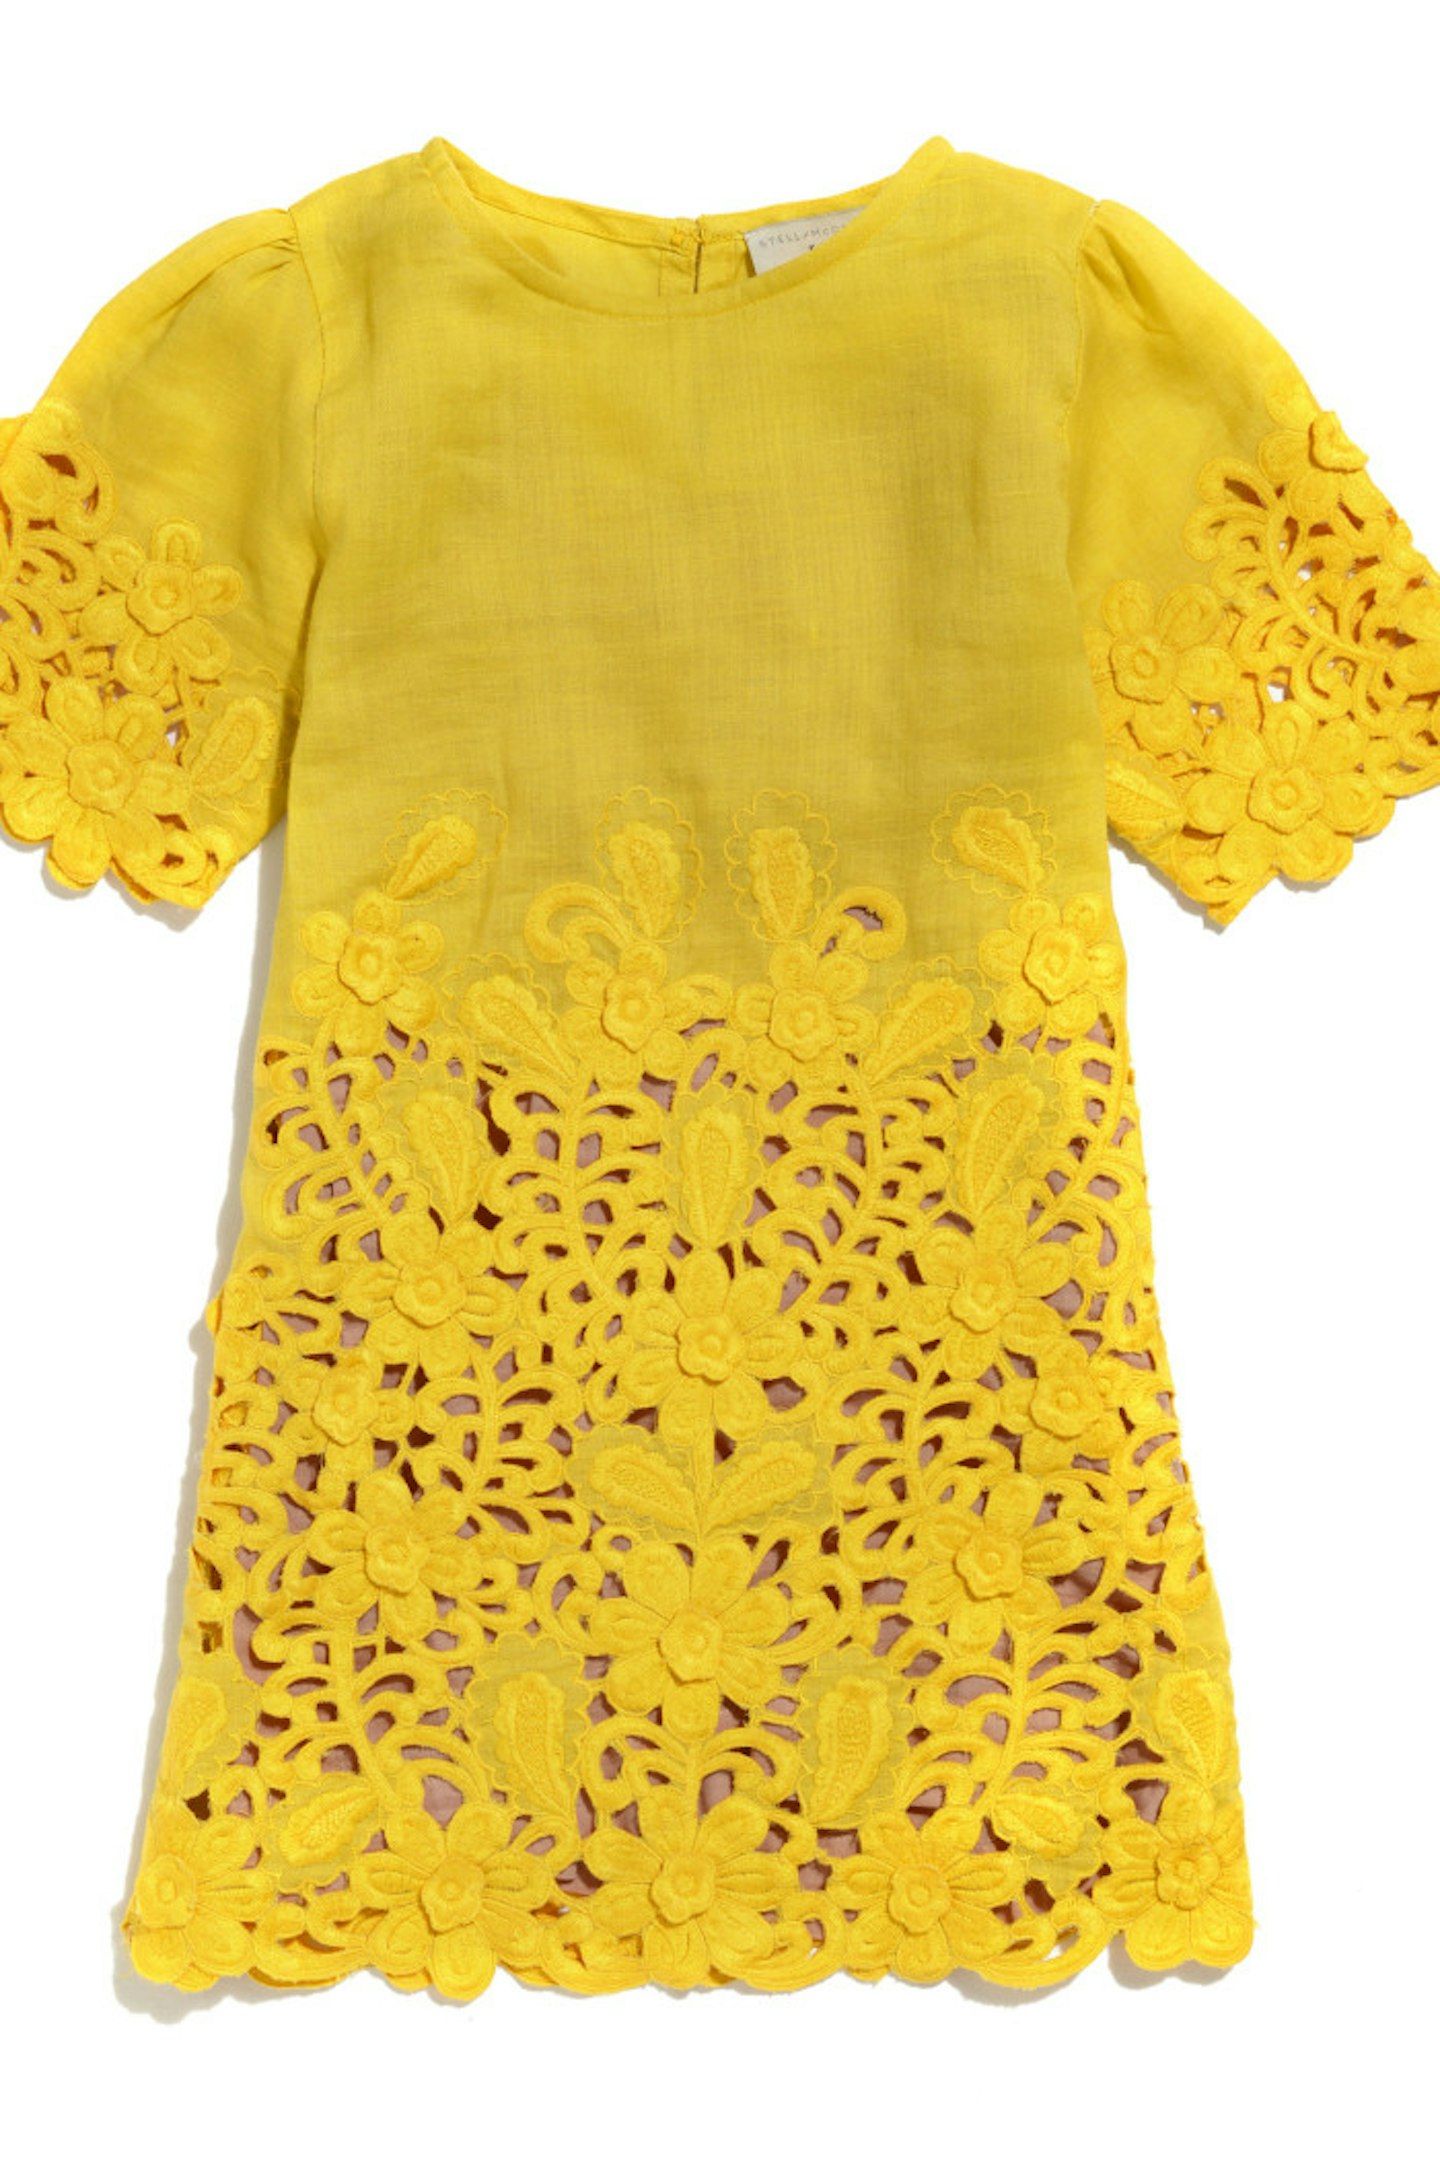 Yellow Stella McCartney flower dress